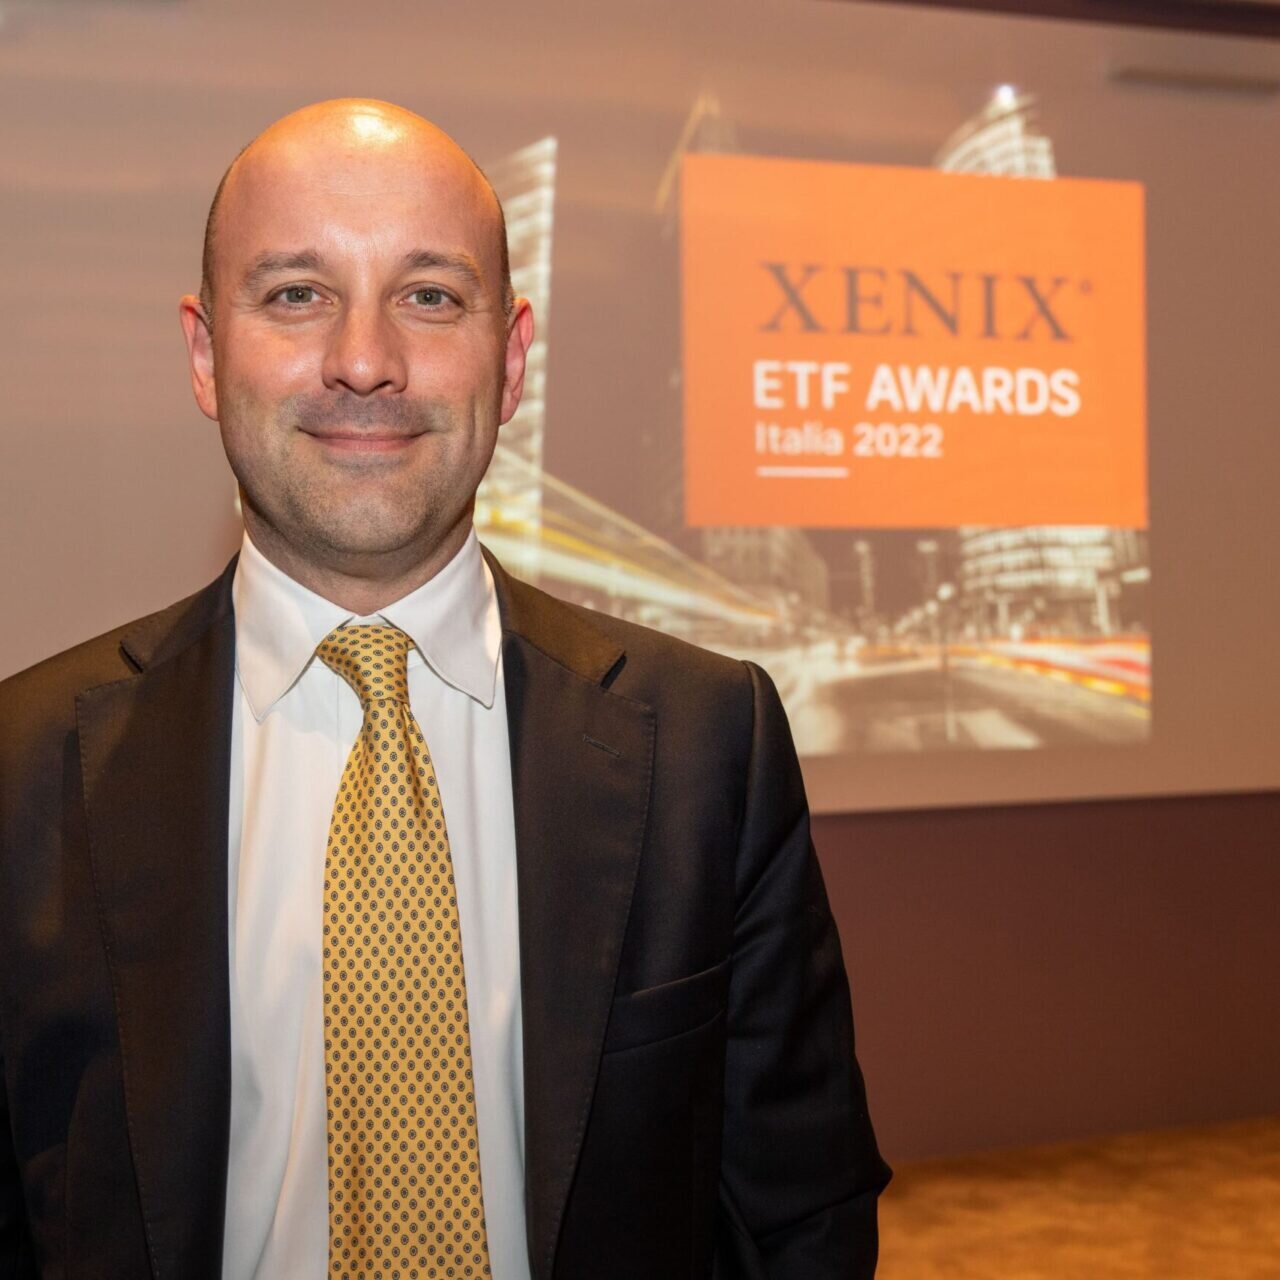 XENIX ETF AWARDS Italia 2022